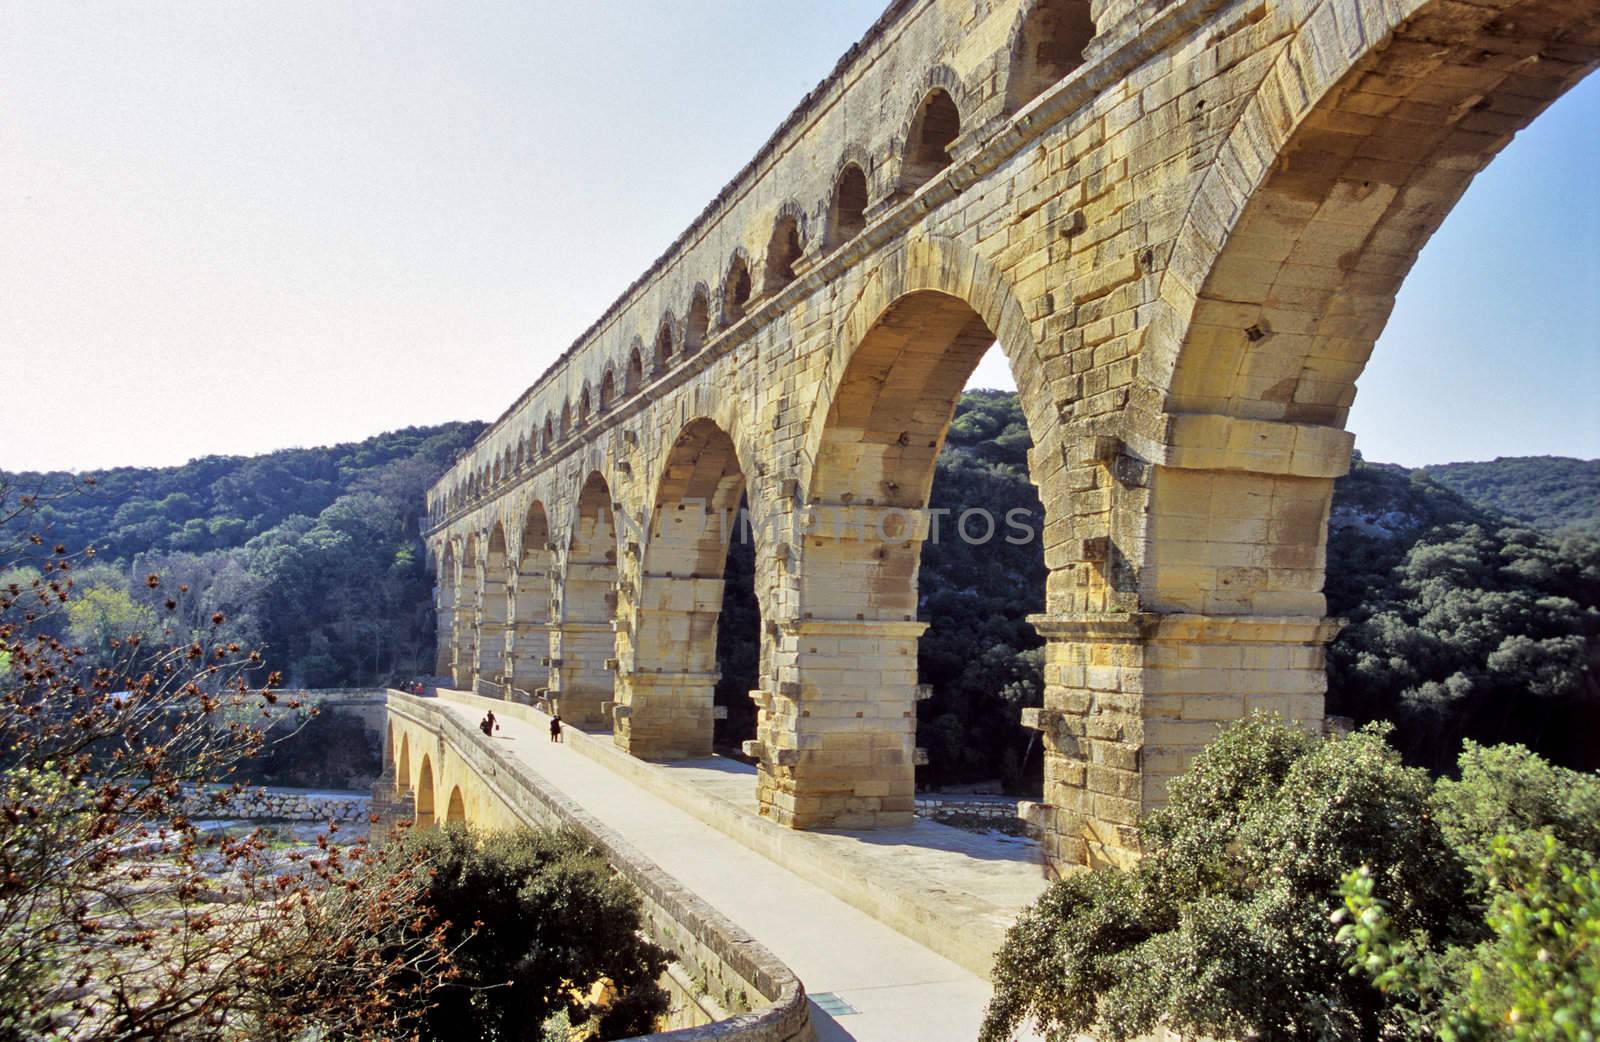 The ancient roman aqueduct, Pont du Gard in Provence, France.